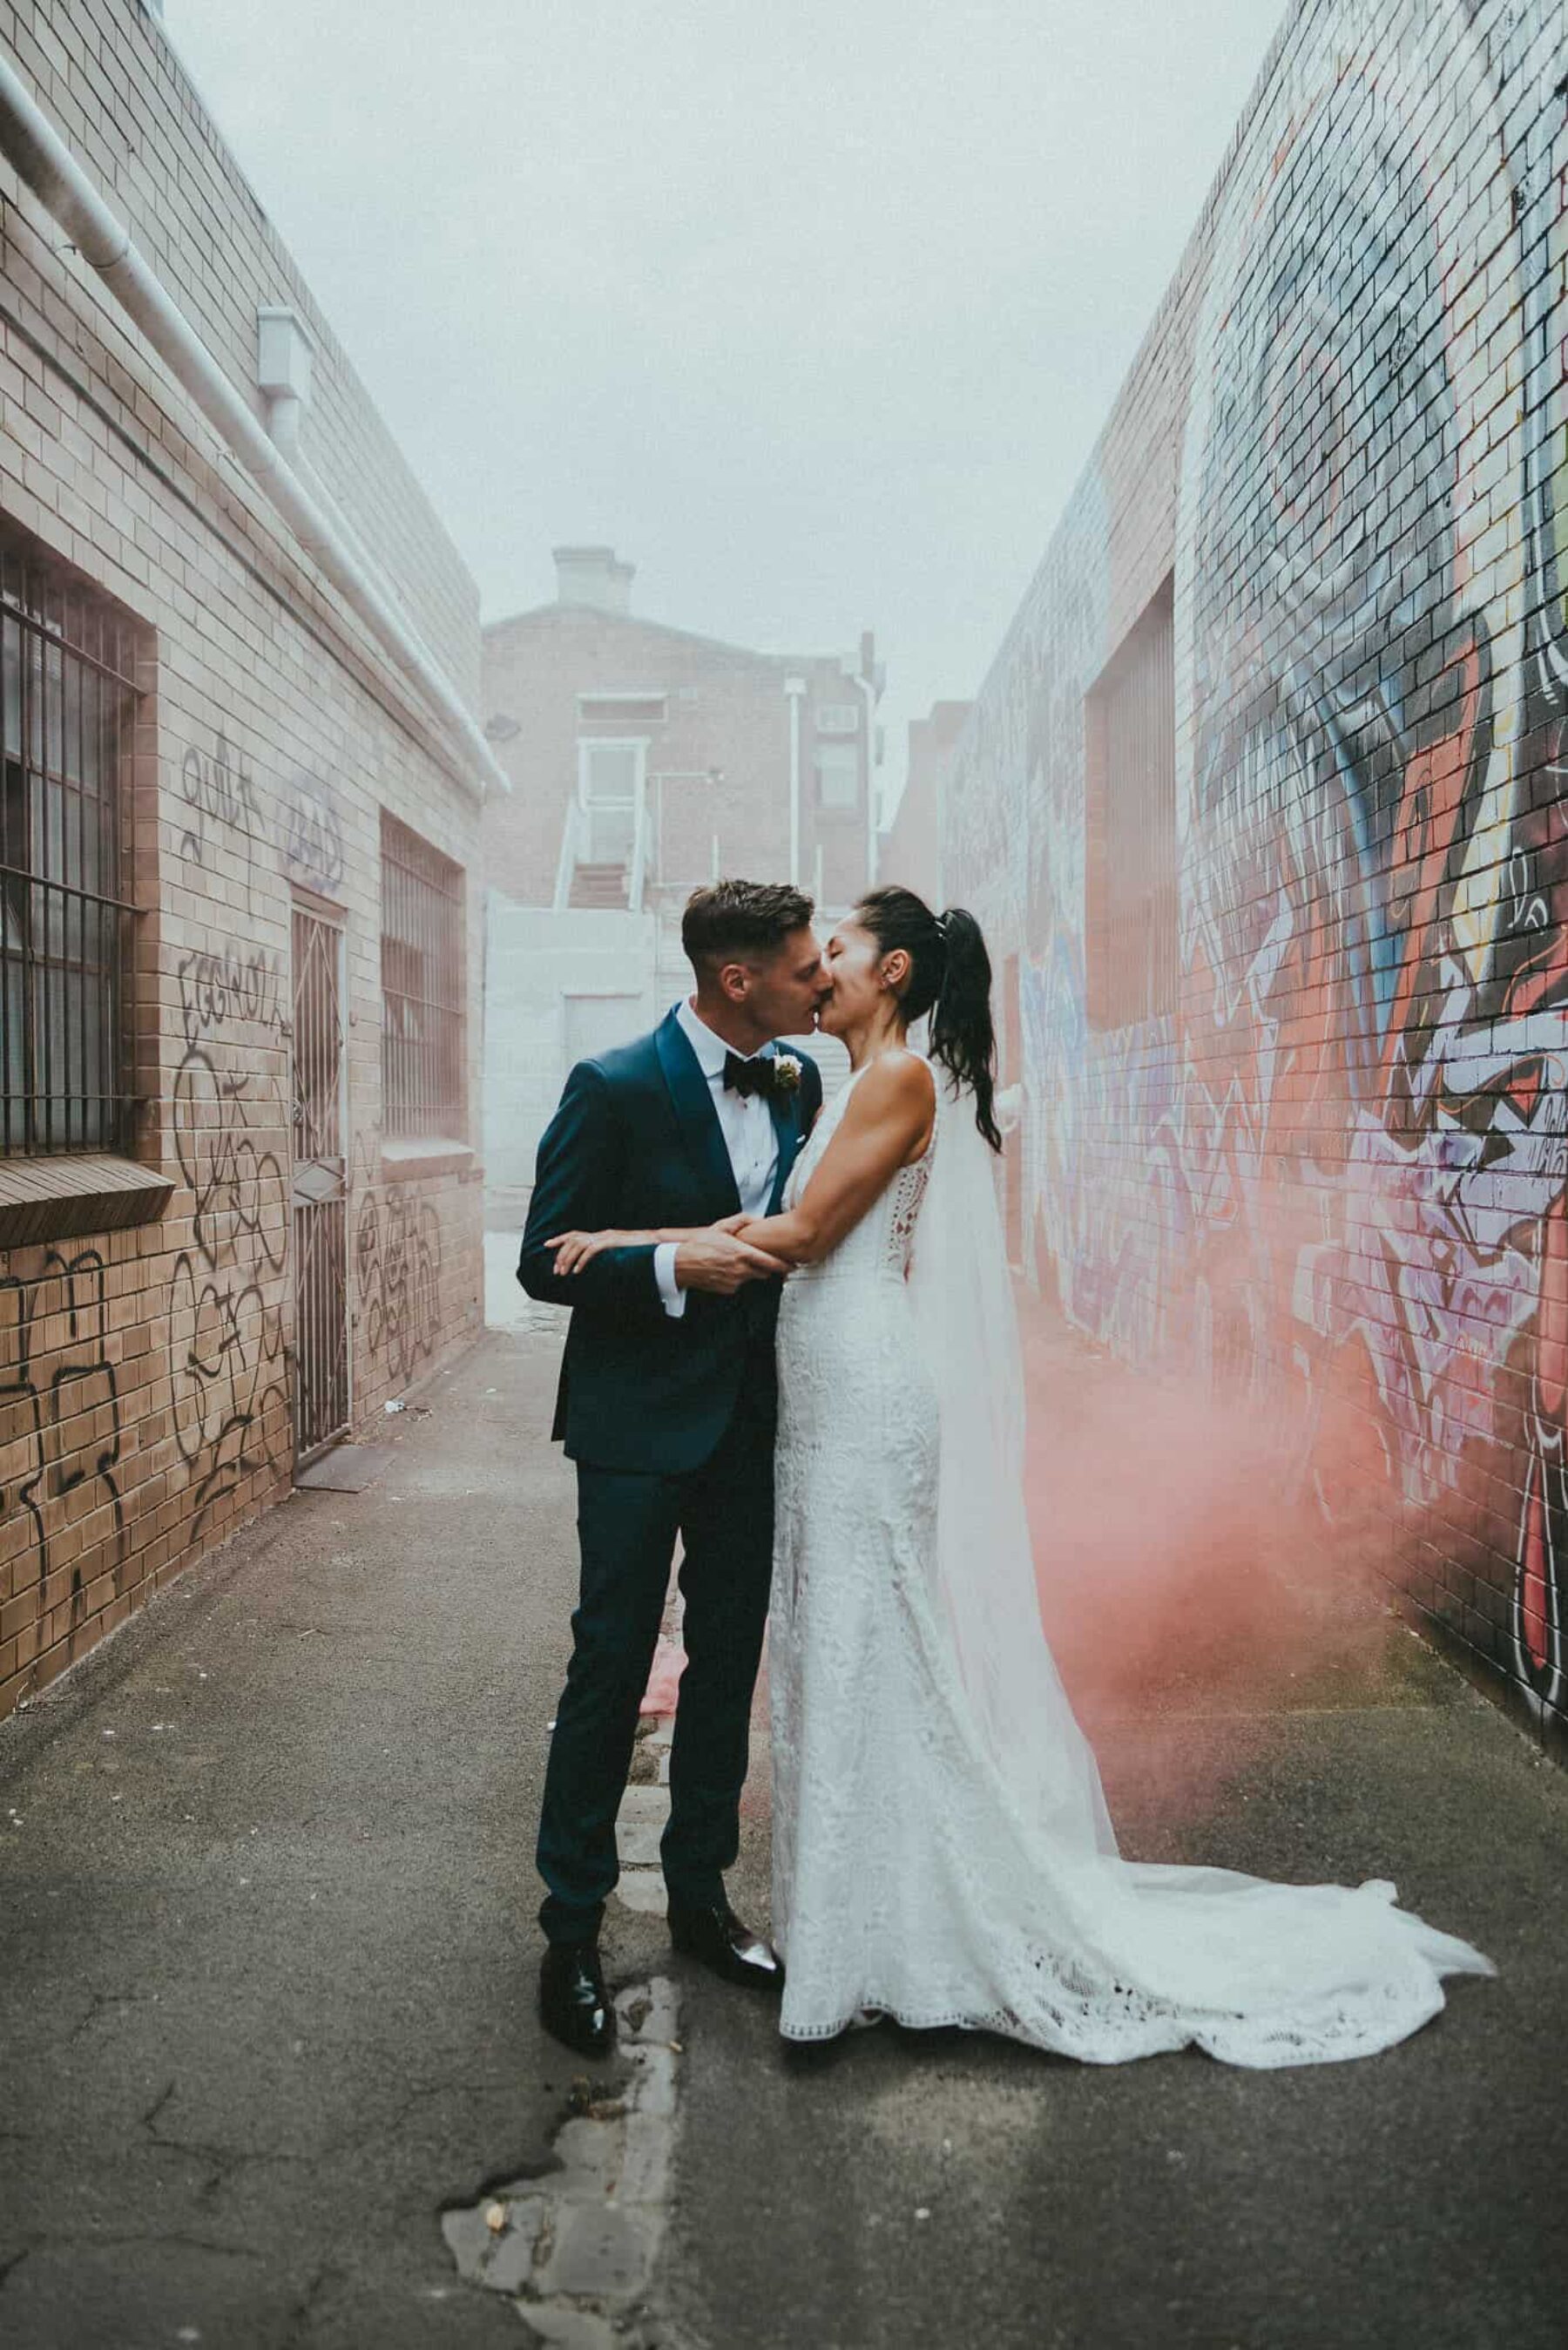 smoke bomb wedding portraits in Melbournee laneways